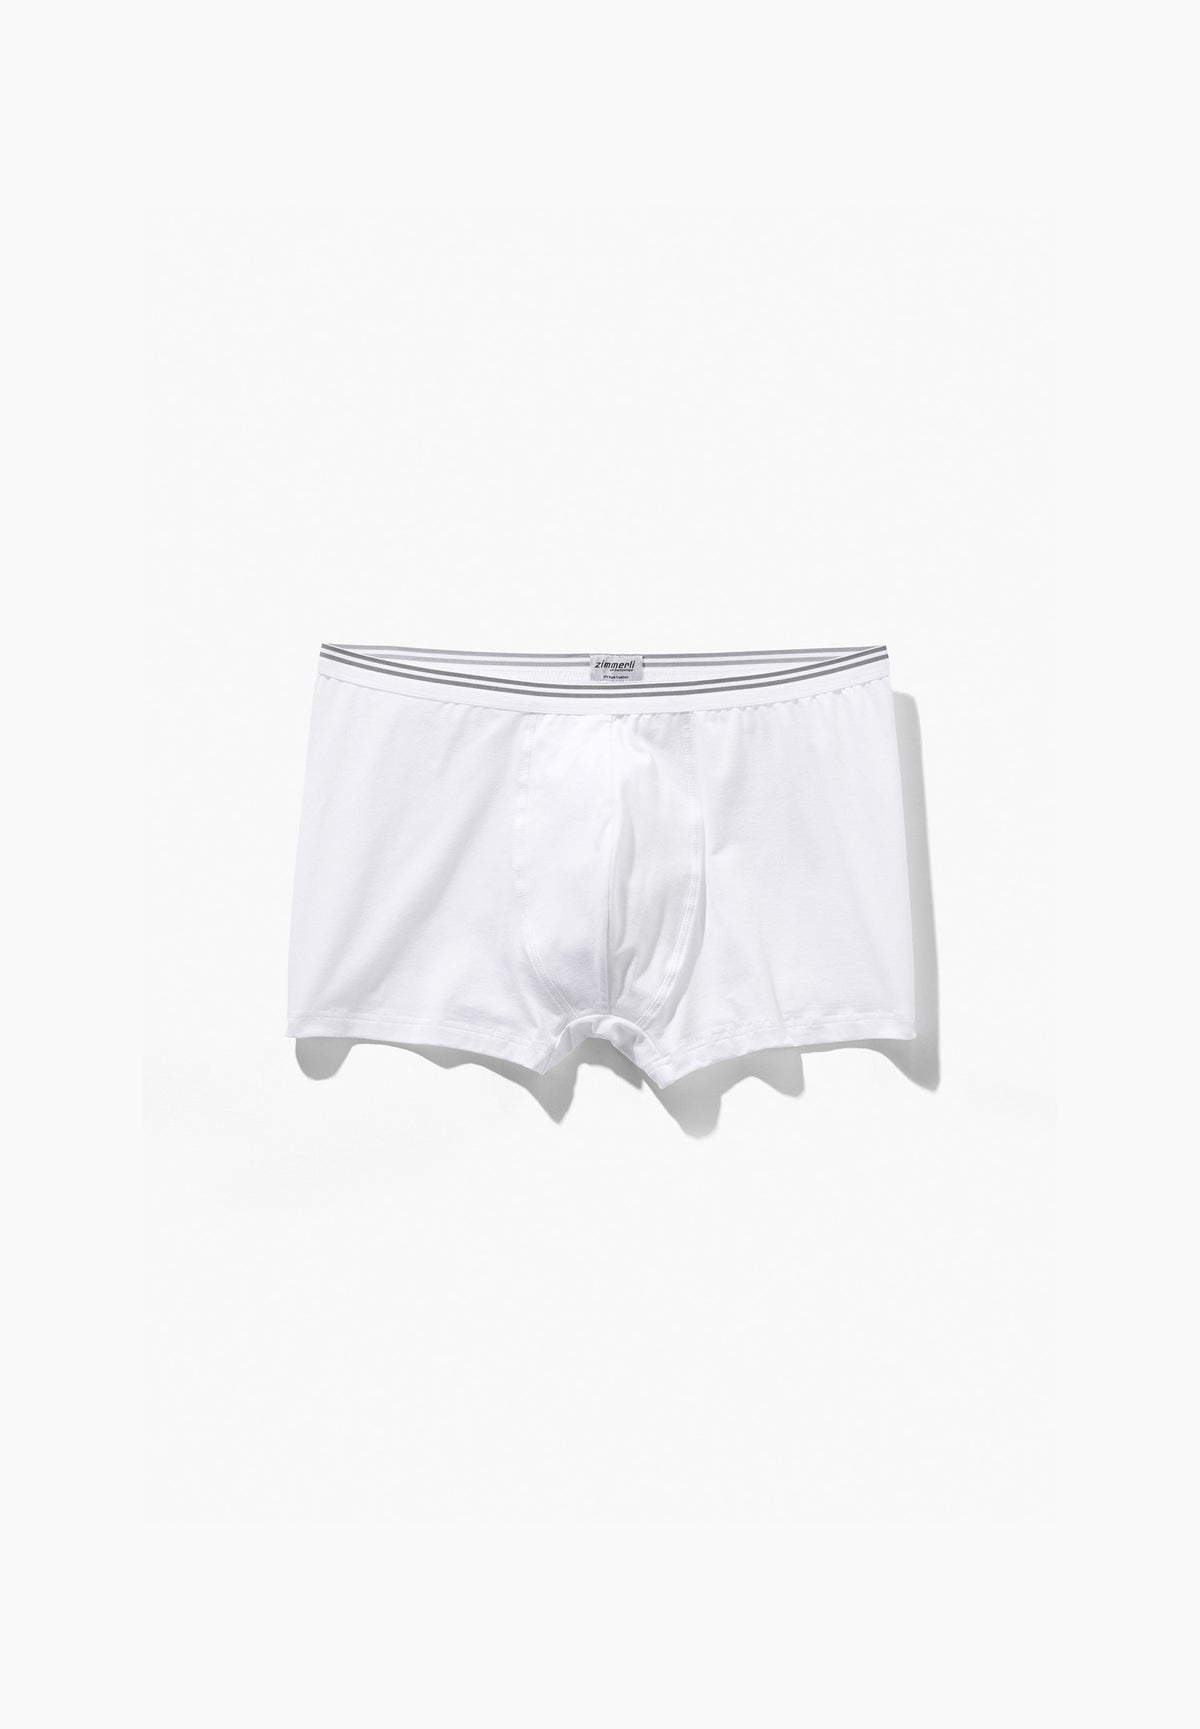 Soft supreme underwear mens For Comfort 